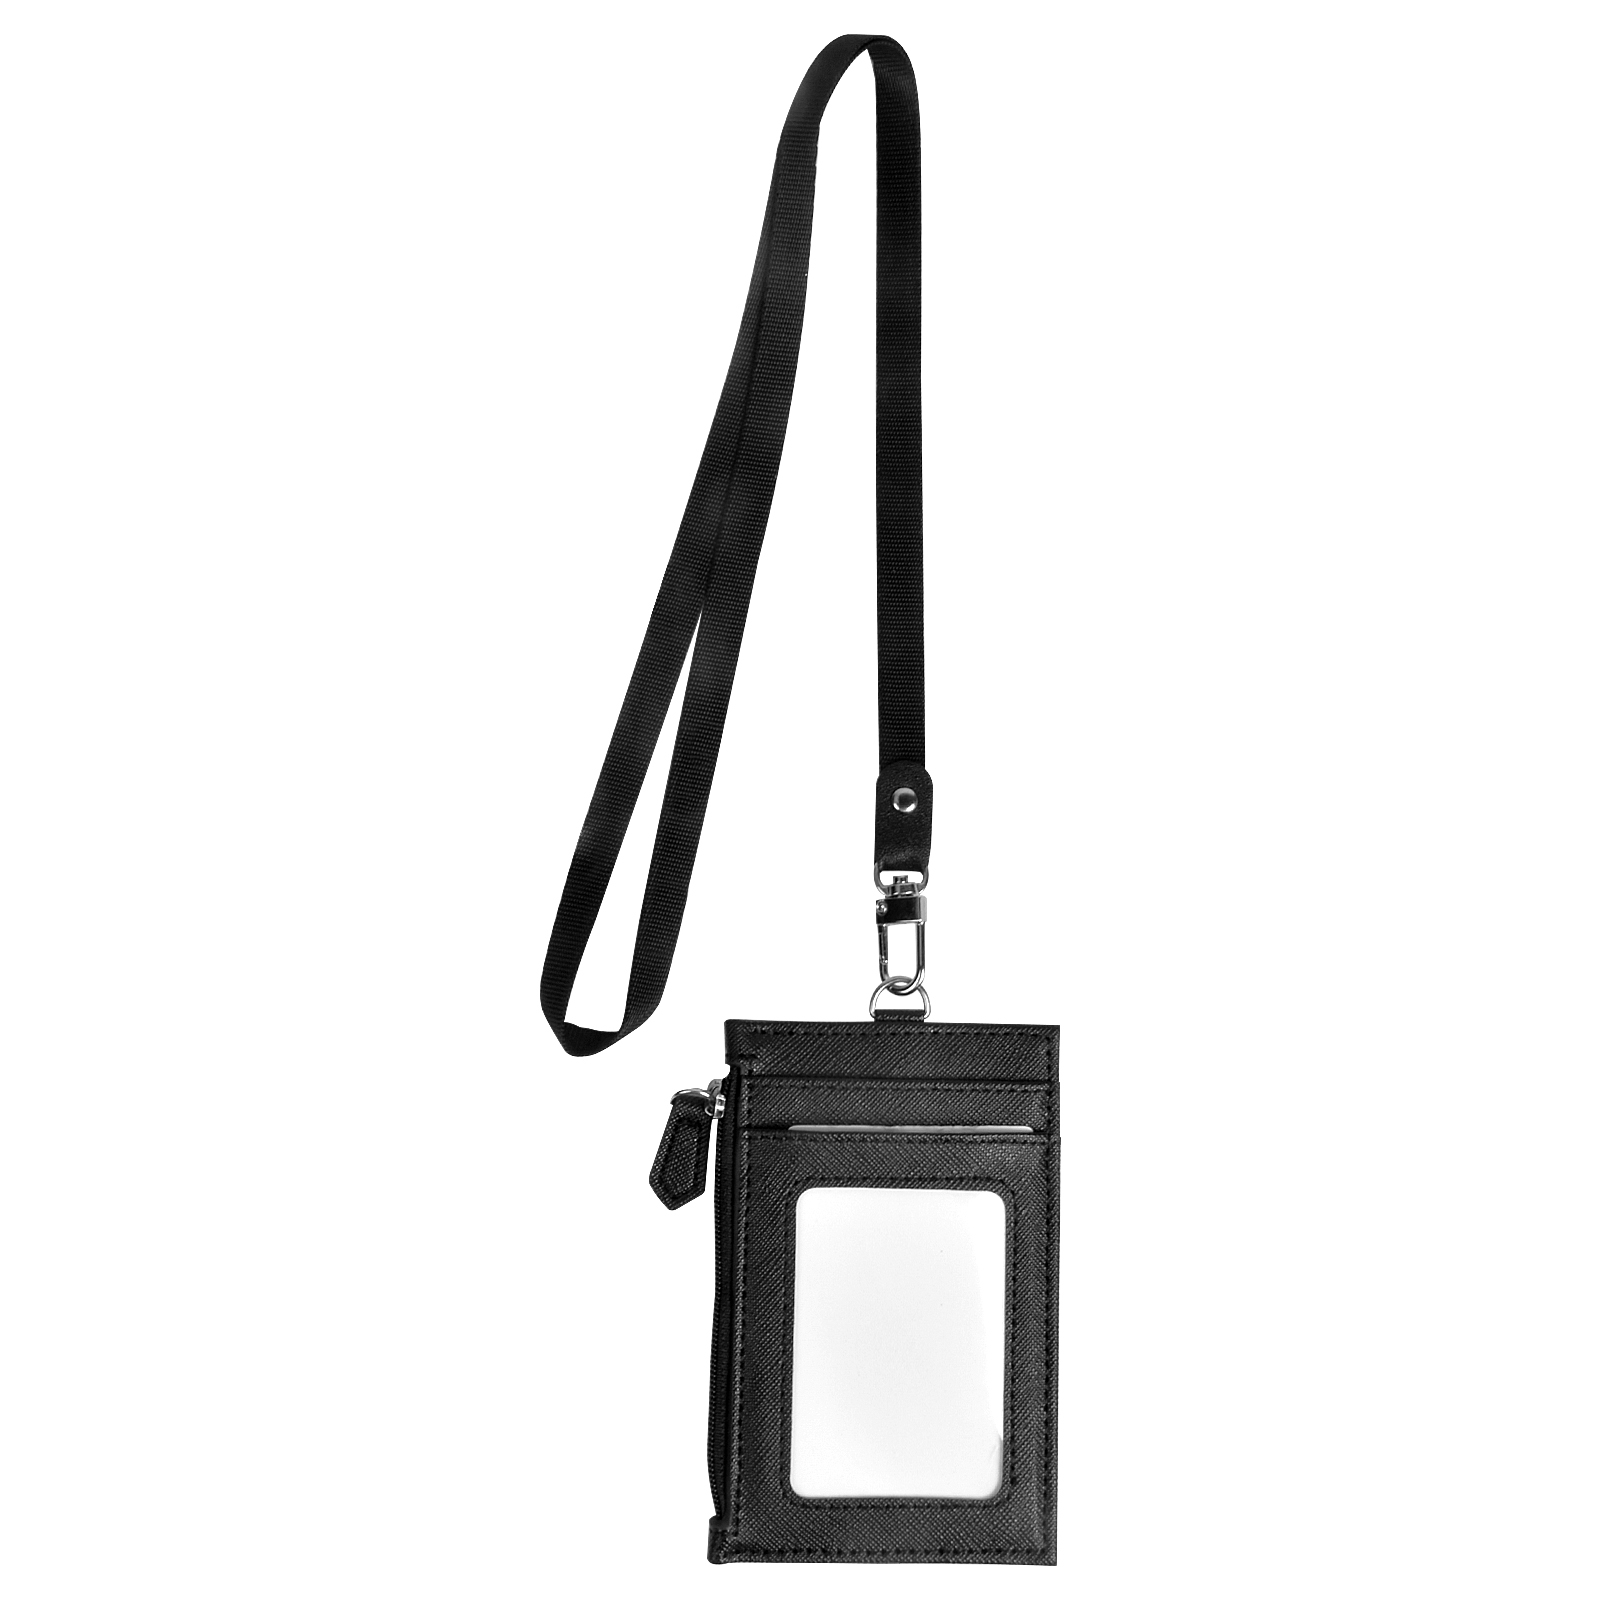 Teskyer Badge Holder with Side Zip Pocket, Multiple Card Slots Leather ID  Holder Wallet with Neck Lanyard for Office Staffs, Teachers/Students